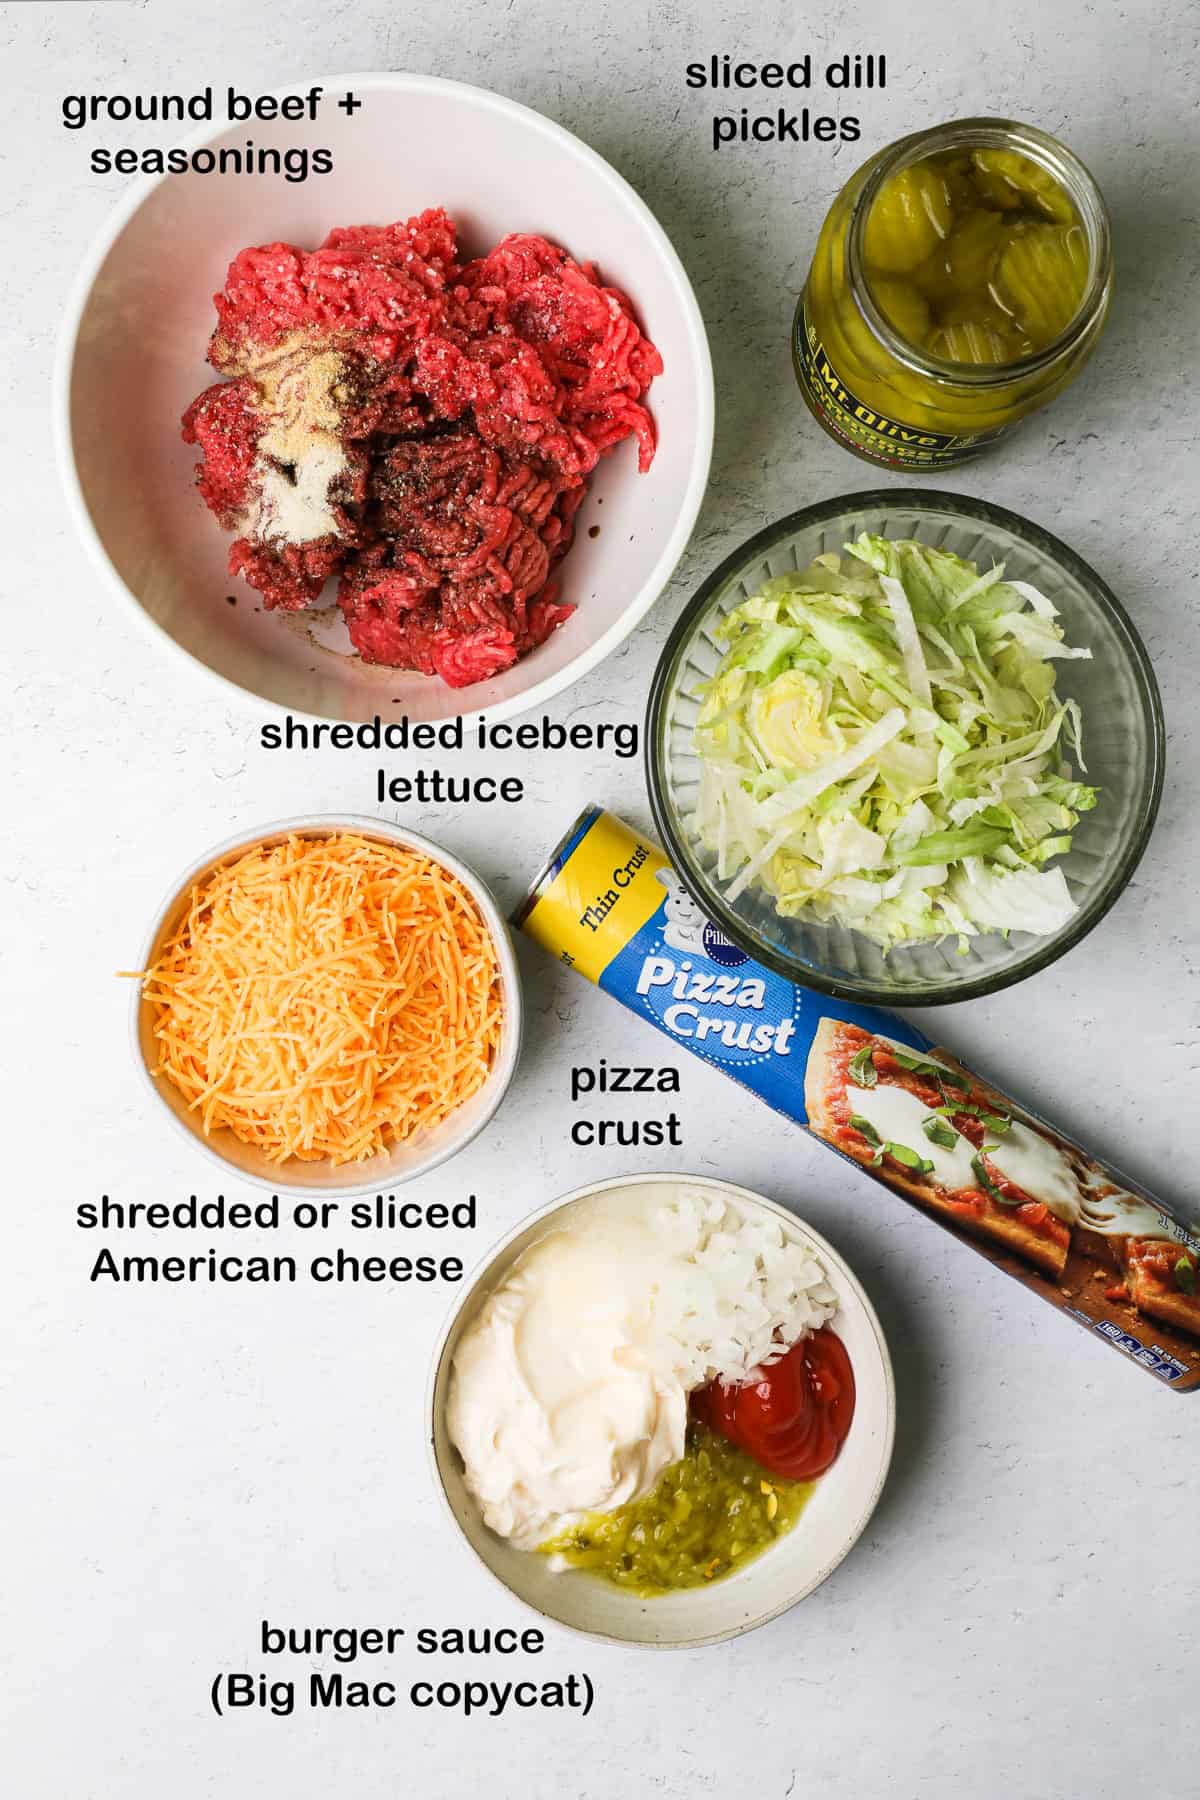 Ingredients to make the recipe.